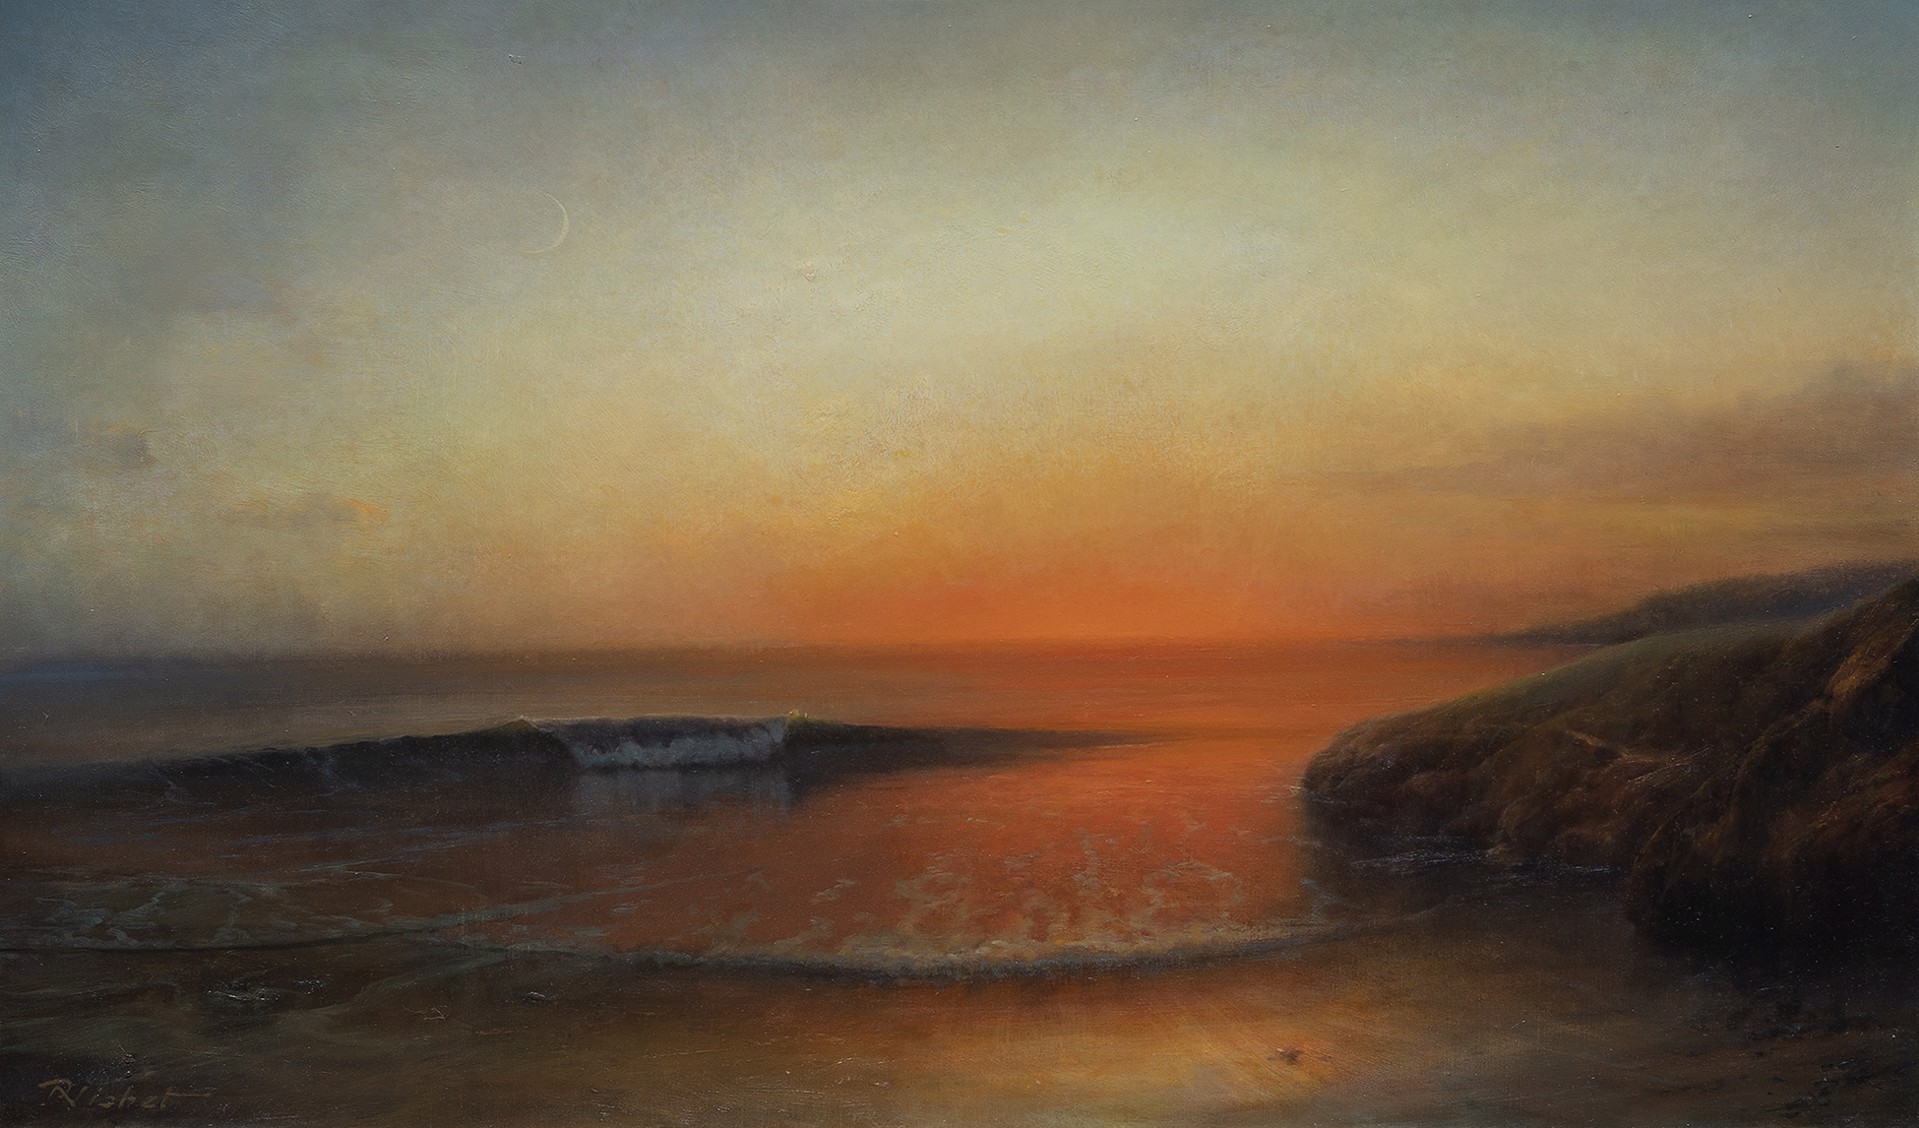 Afterglow by P.A. Nisbet